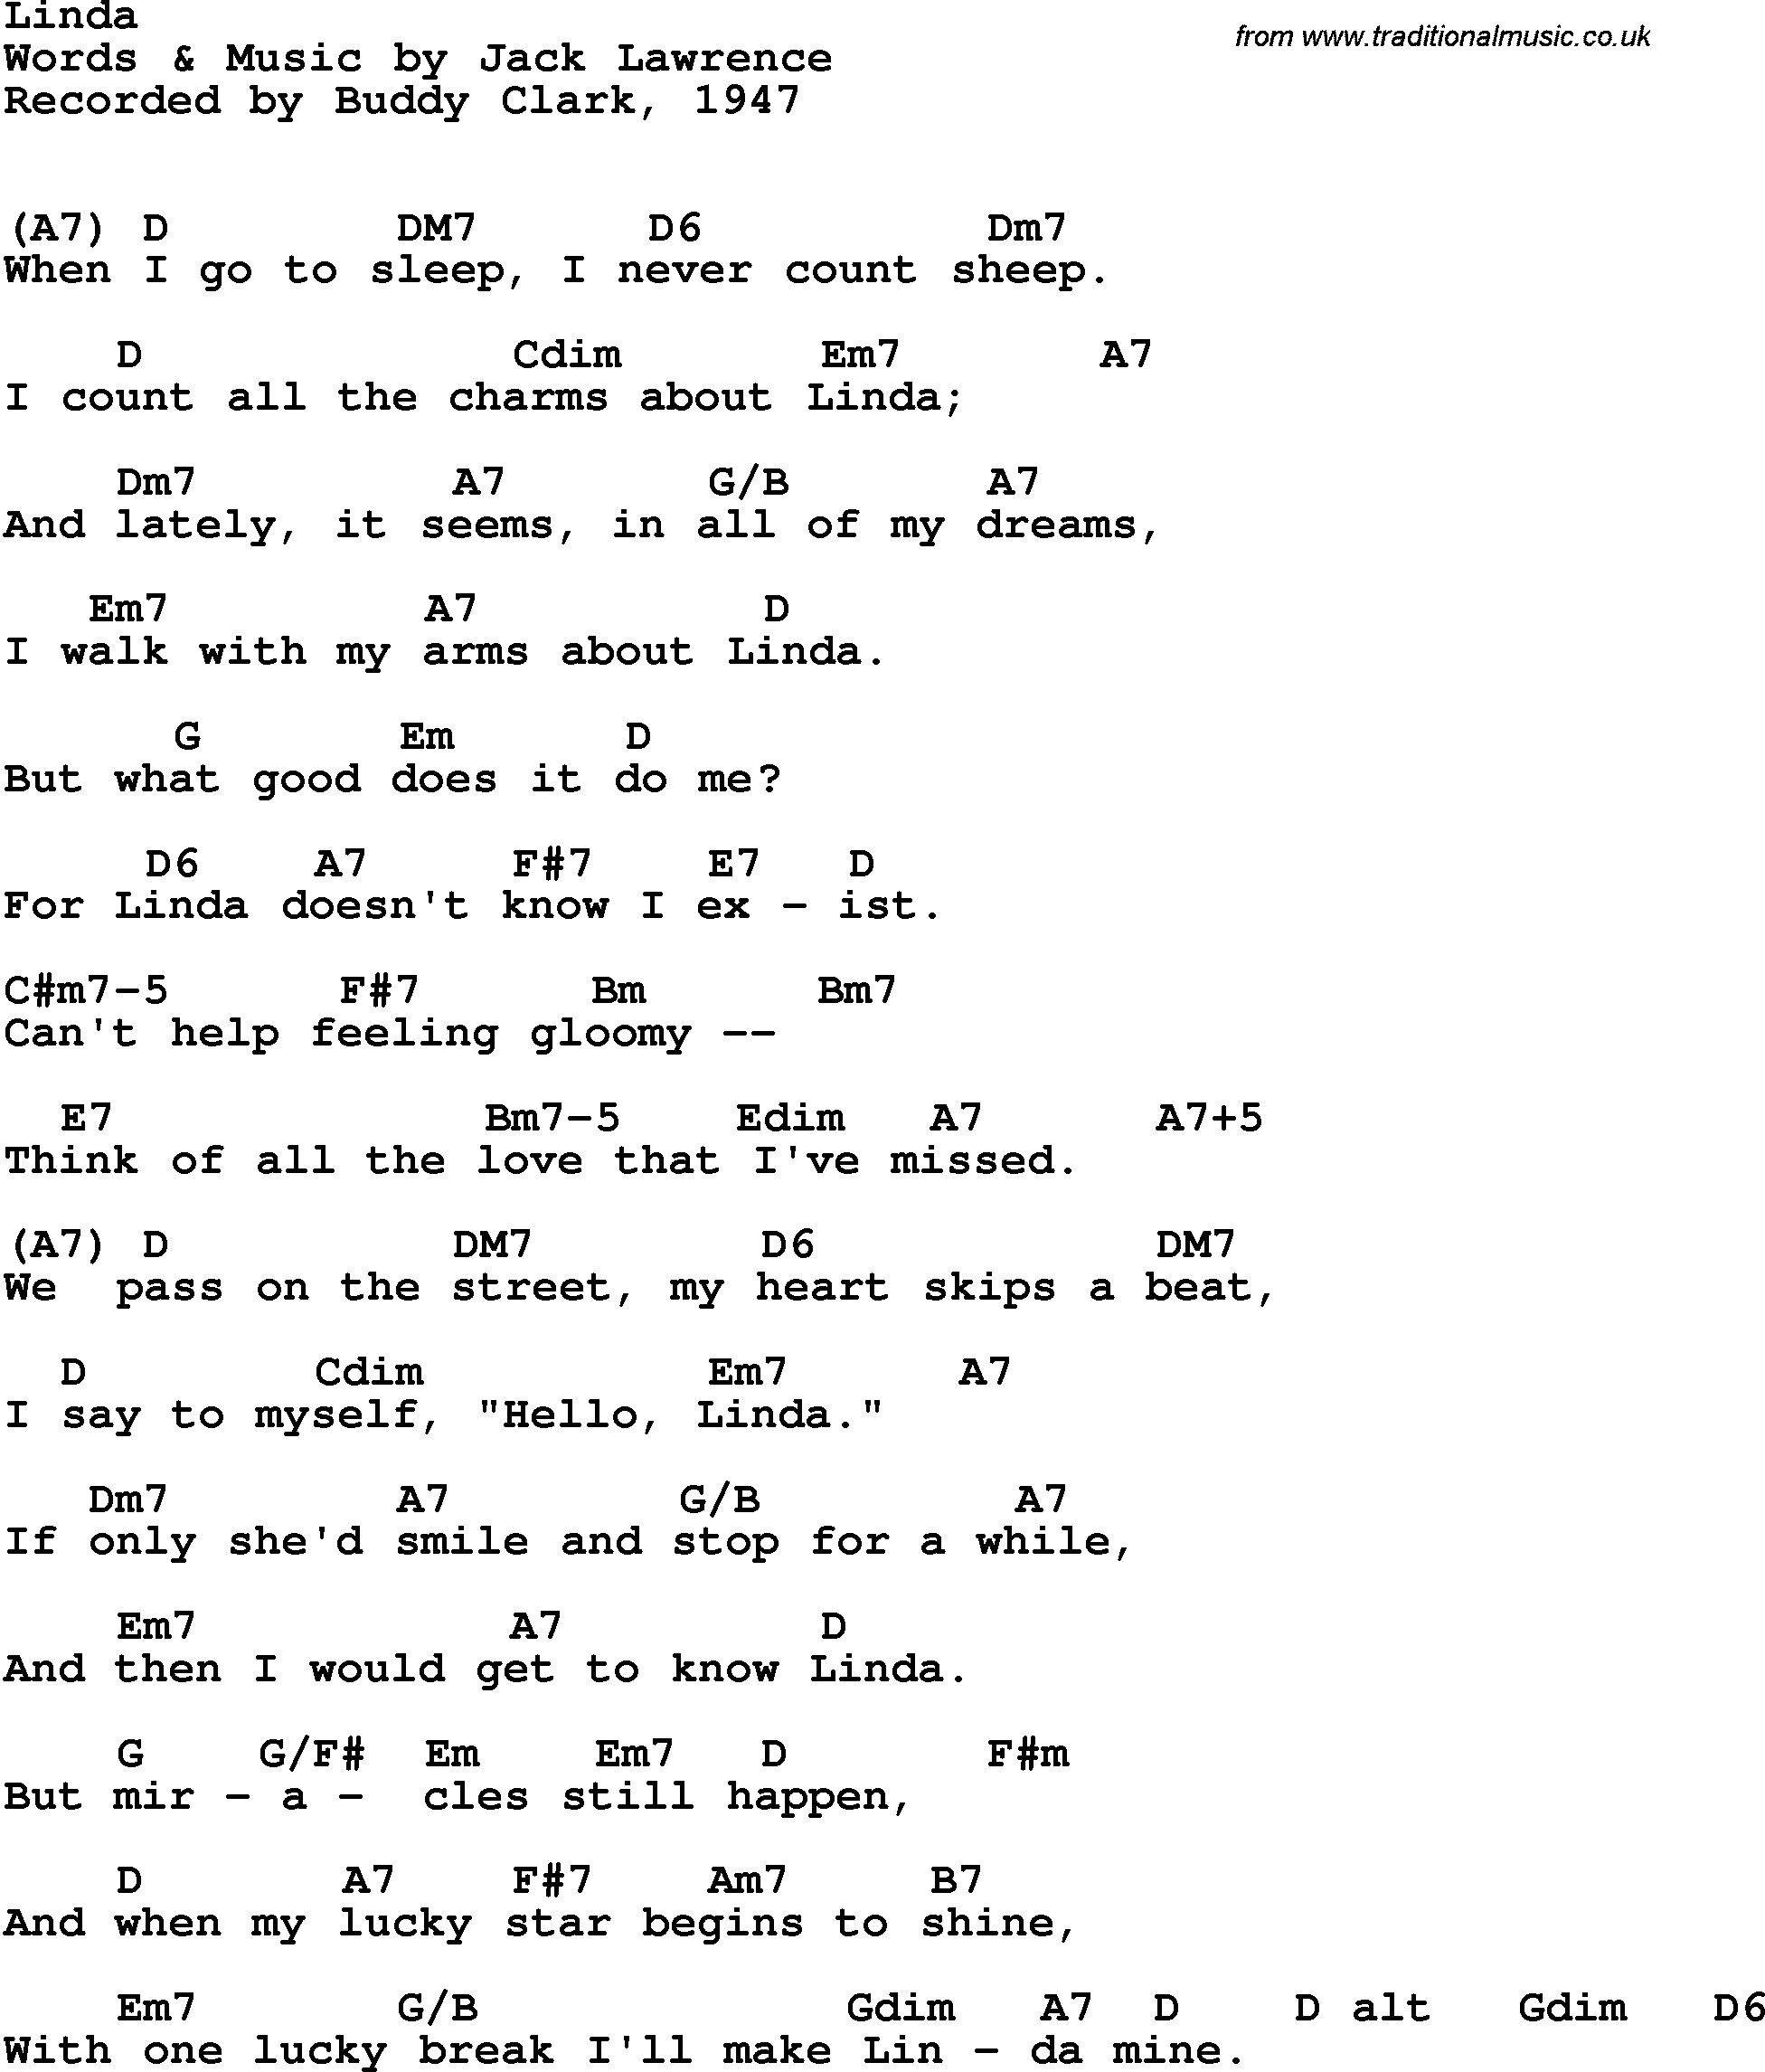 Song Lyrics with guitar chords for Linda - Buddy Clark, 1947